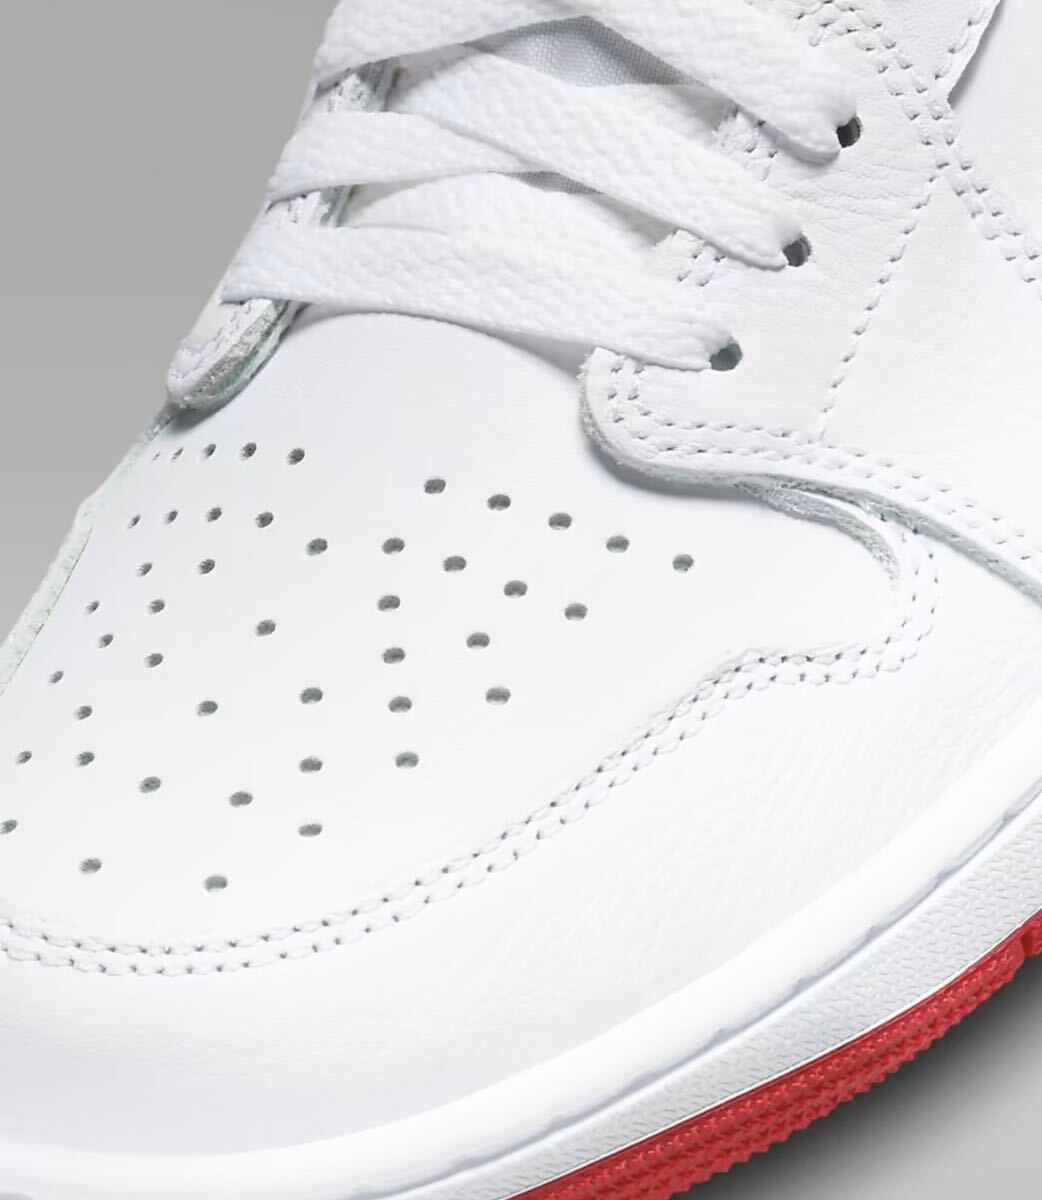 Nike Air Jordan 1 Retro LowOG White and University Redナイキ エアジョーダン1 レトロ ロー OG ホワイト アンド ユニバーシティレッド_画像7